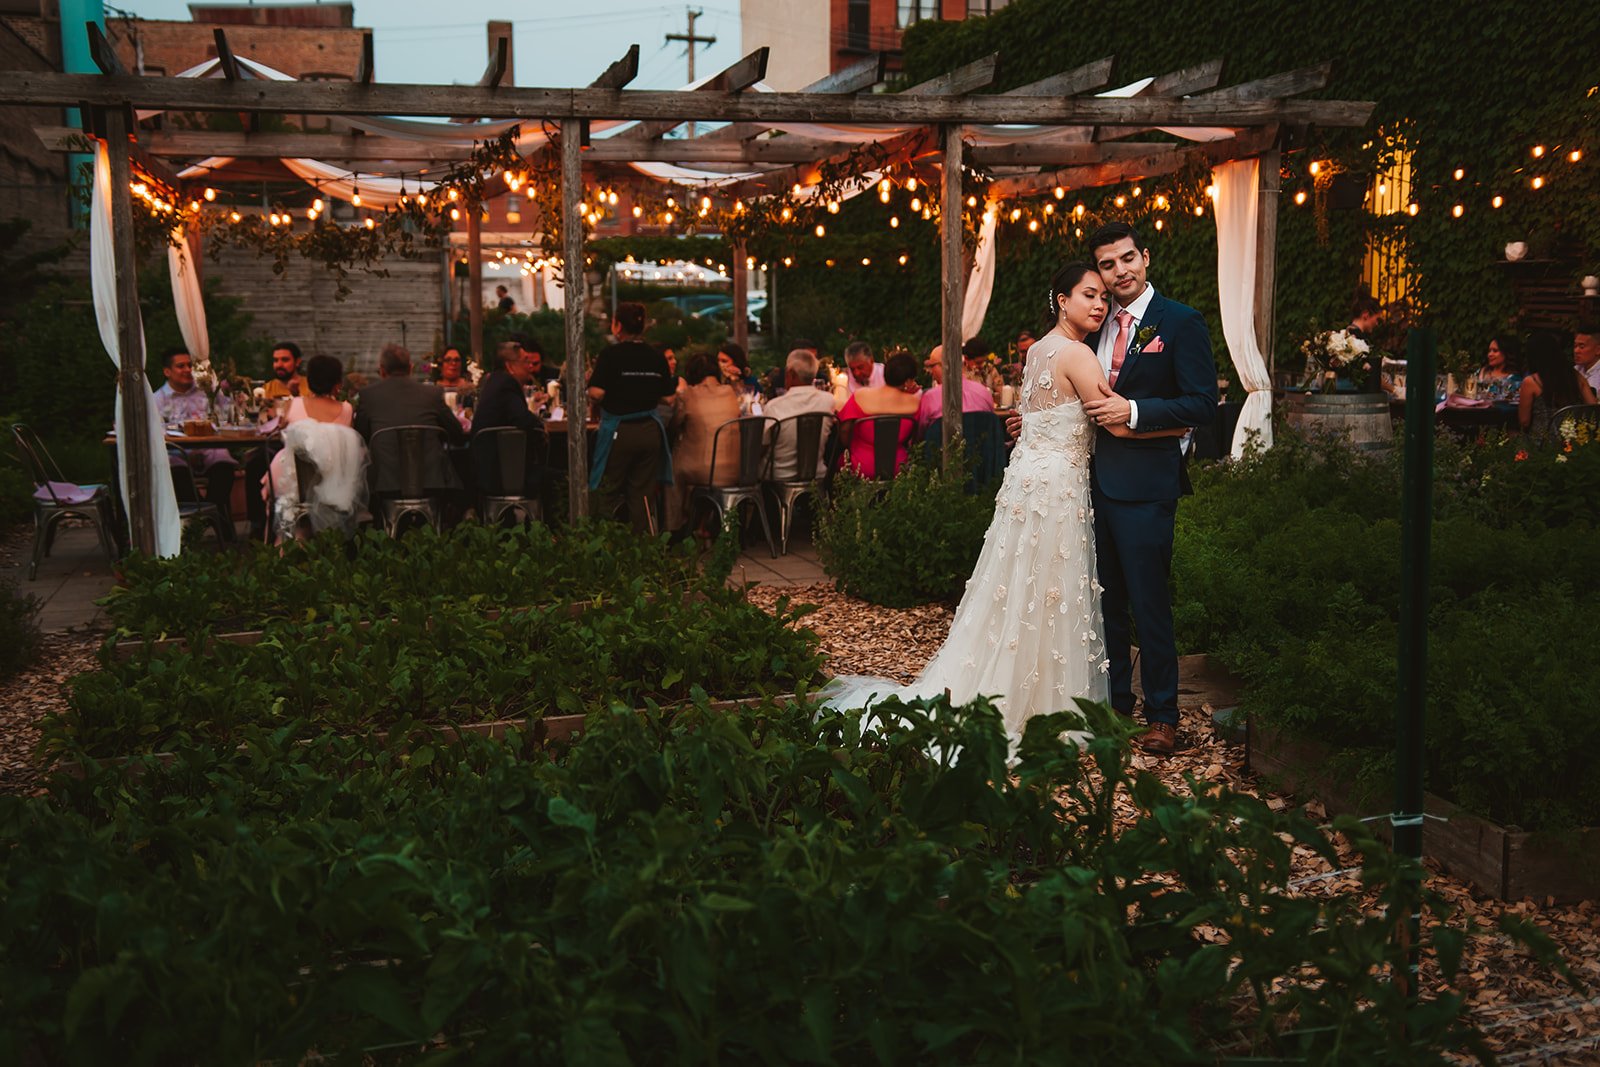 Alexa + Dario's Intimate Wedding